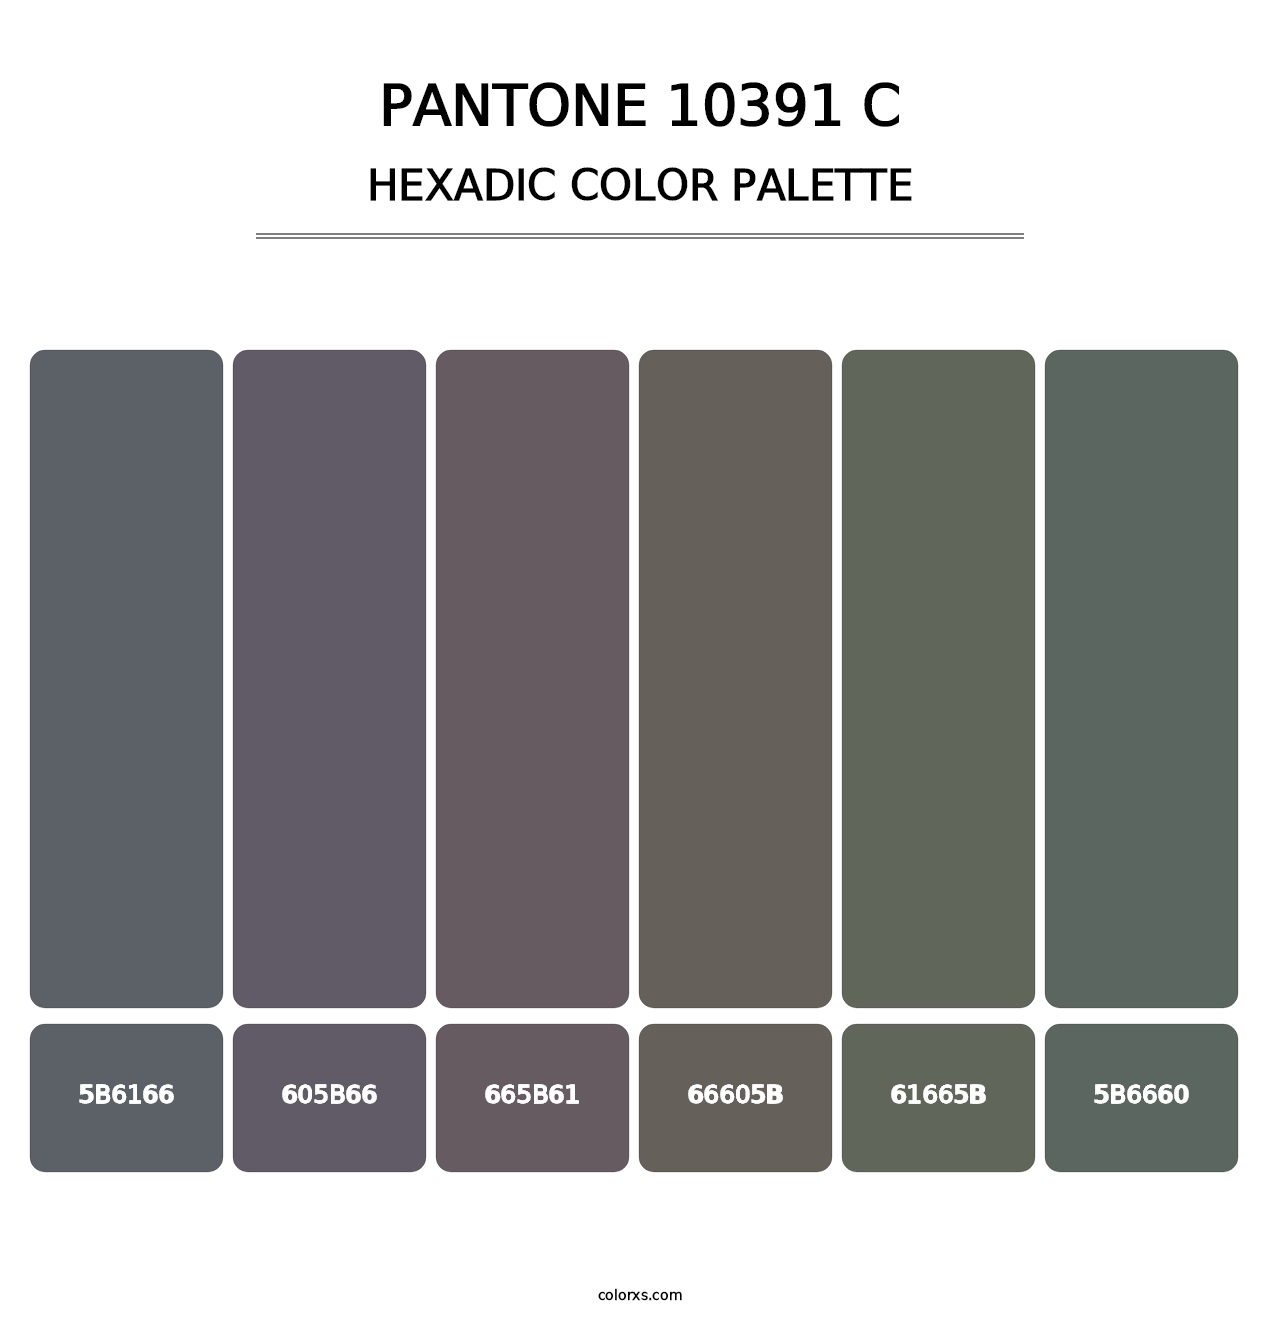 PANTONE 10391 C - Hexadic Color Palette